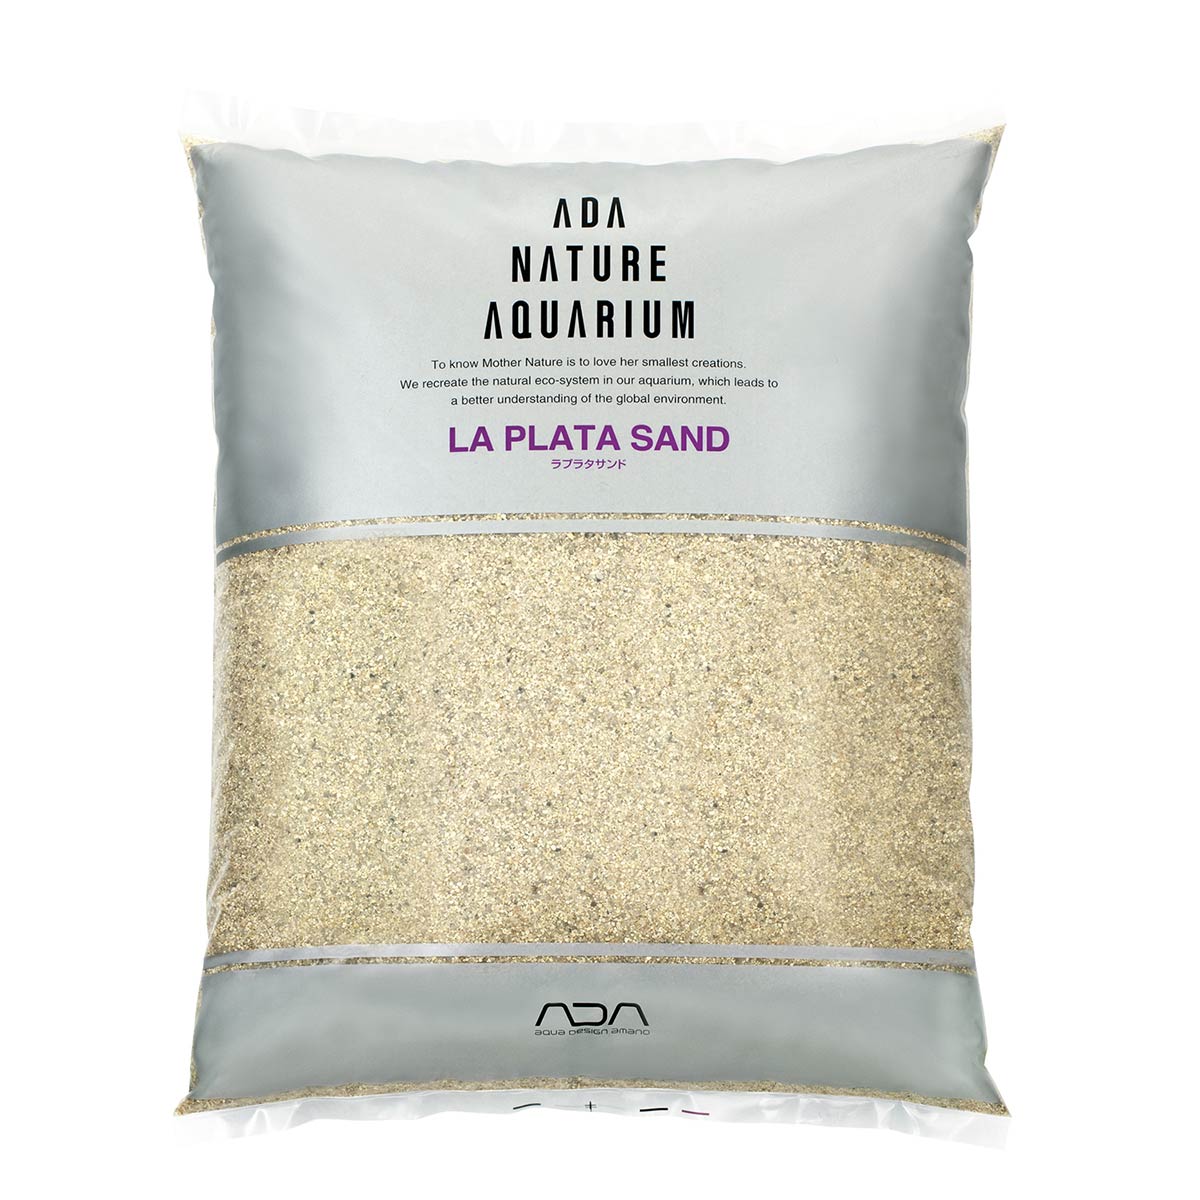 ADA La Plata Sand 2kg